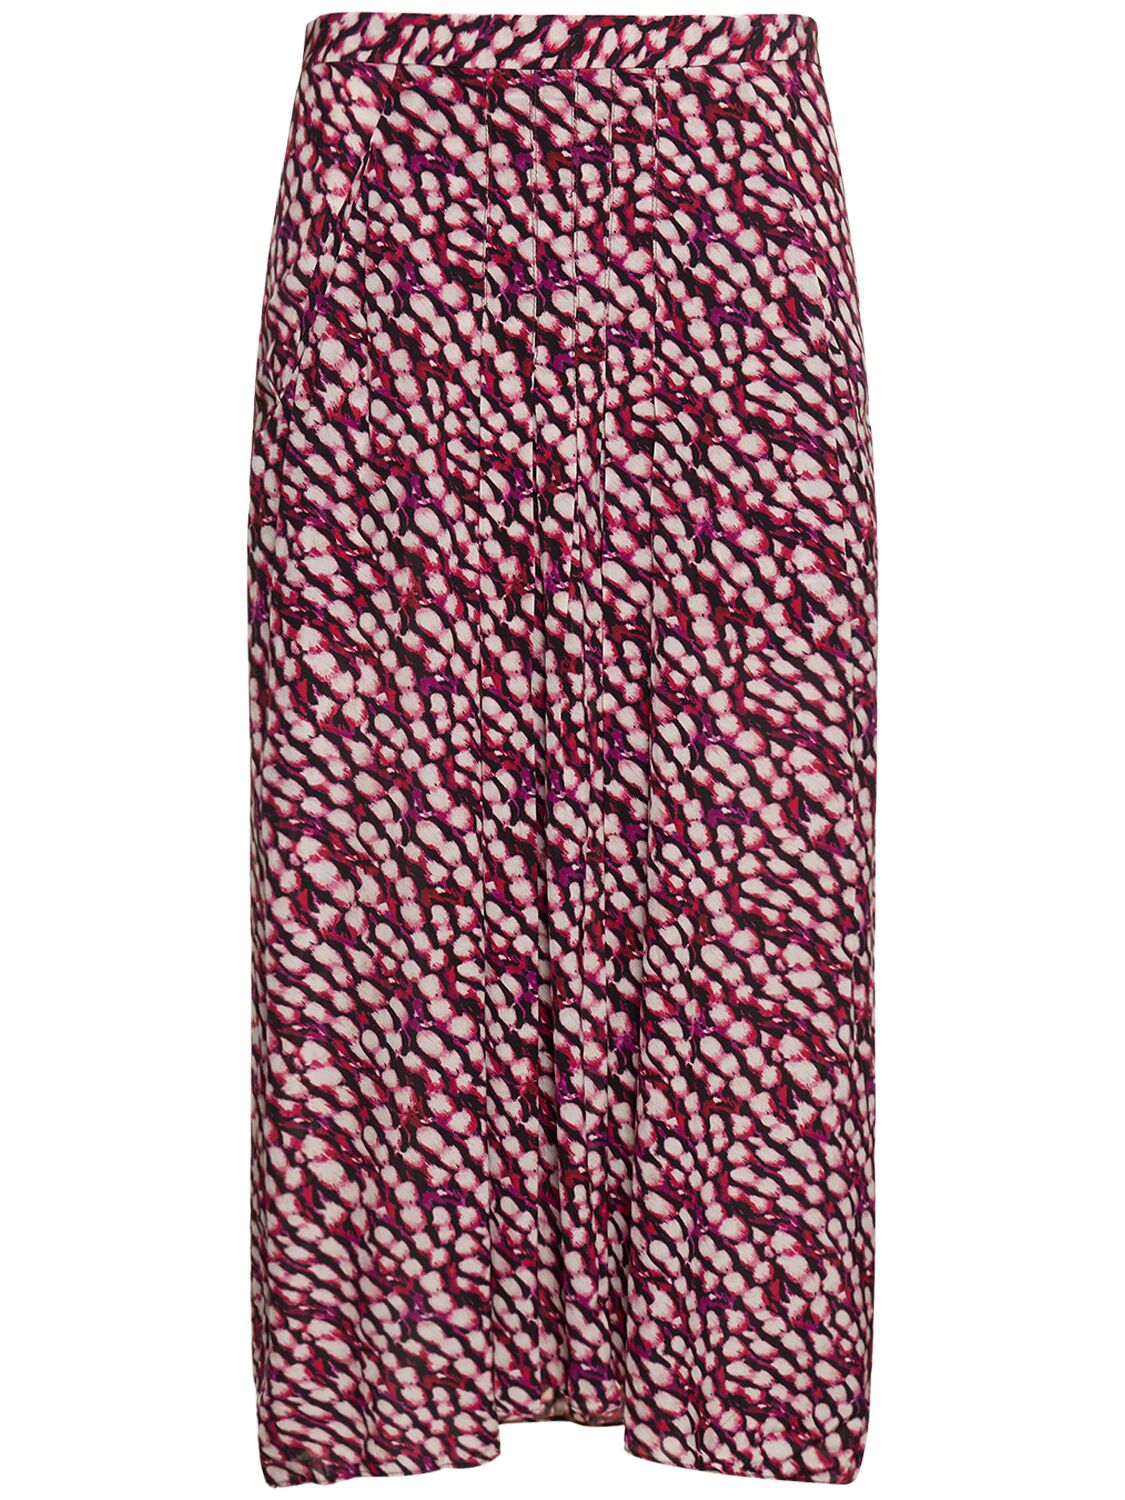 Marant Etoile Eolia印花粘胶纤维长款半身裙 In Multi Fuchsia